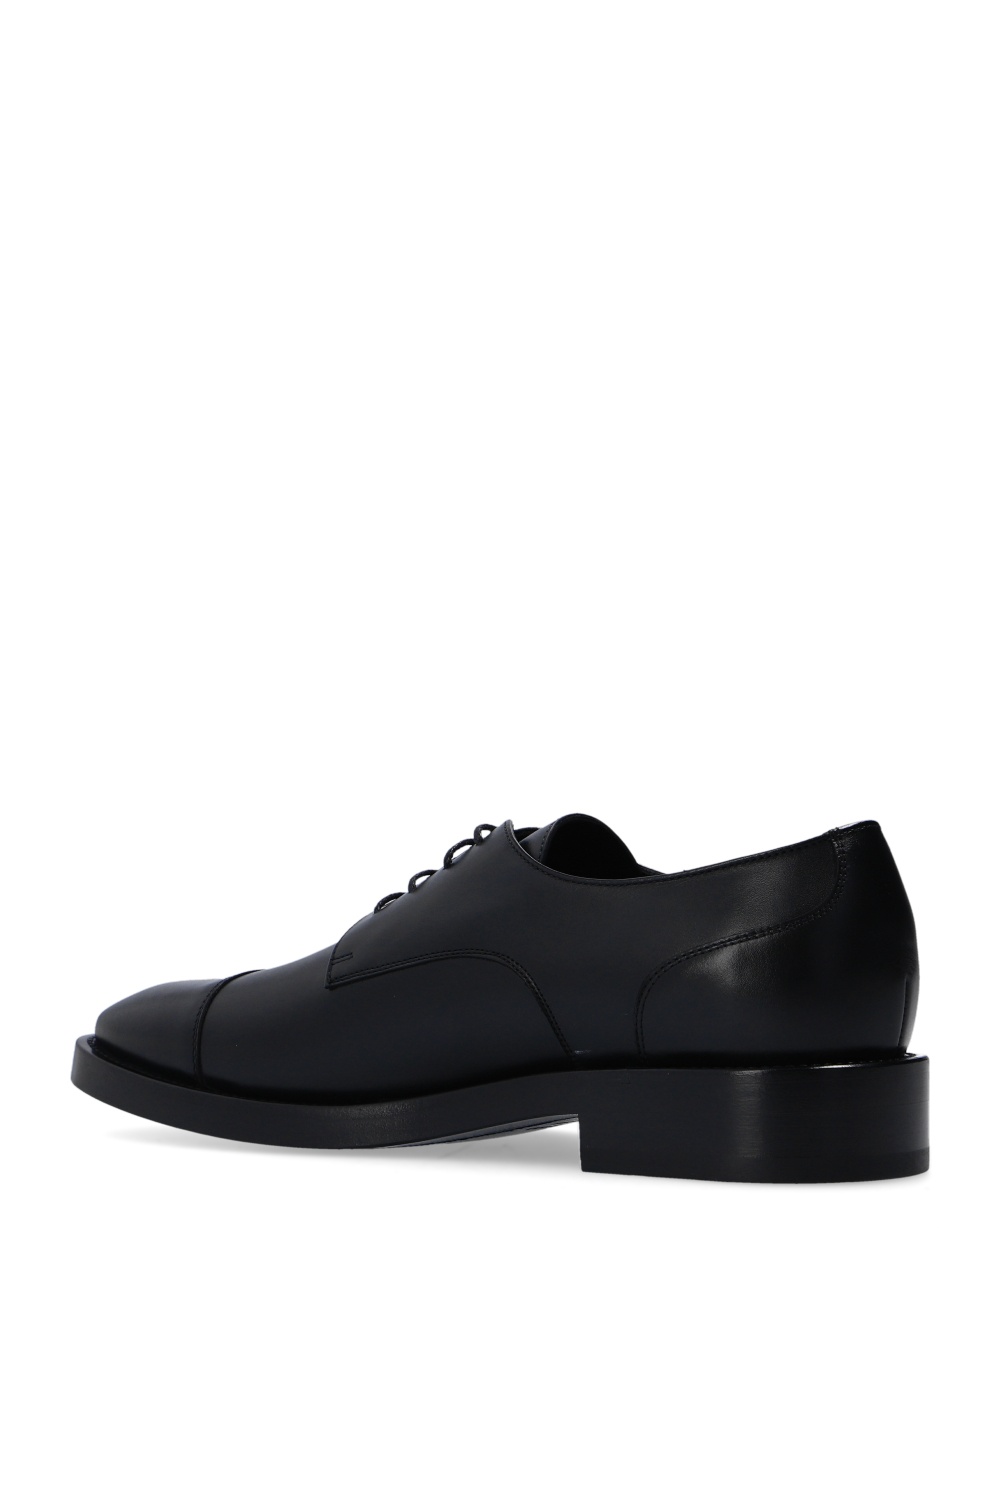 Balenciaga nike air zoom type men lifestyle basic shoes sneakers new